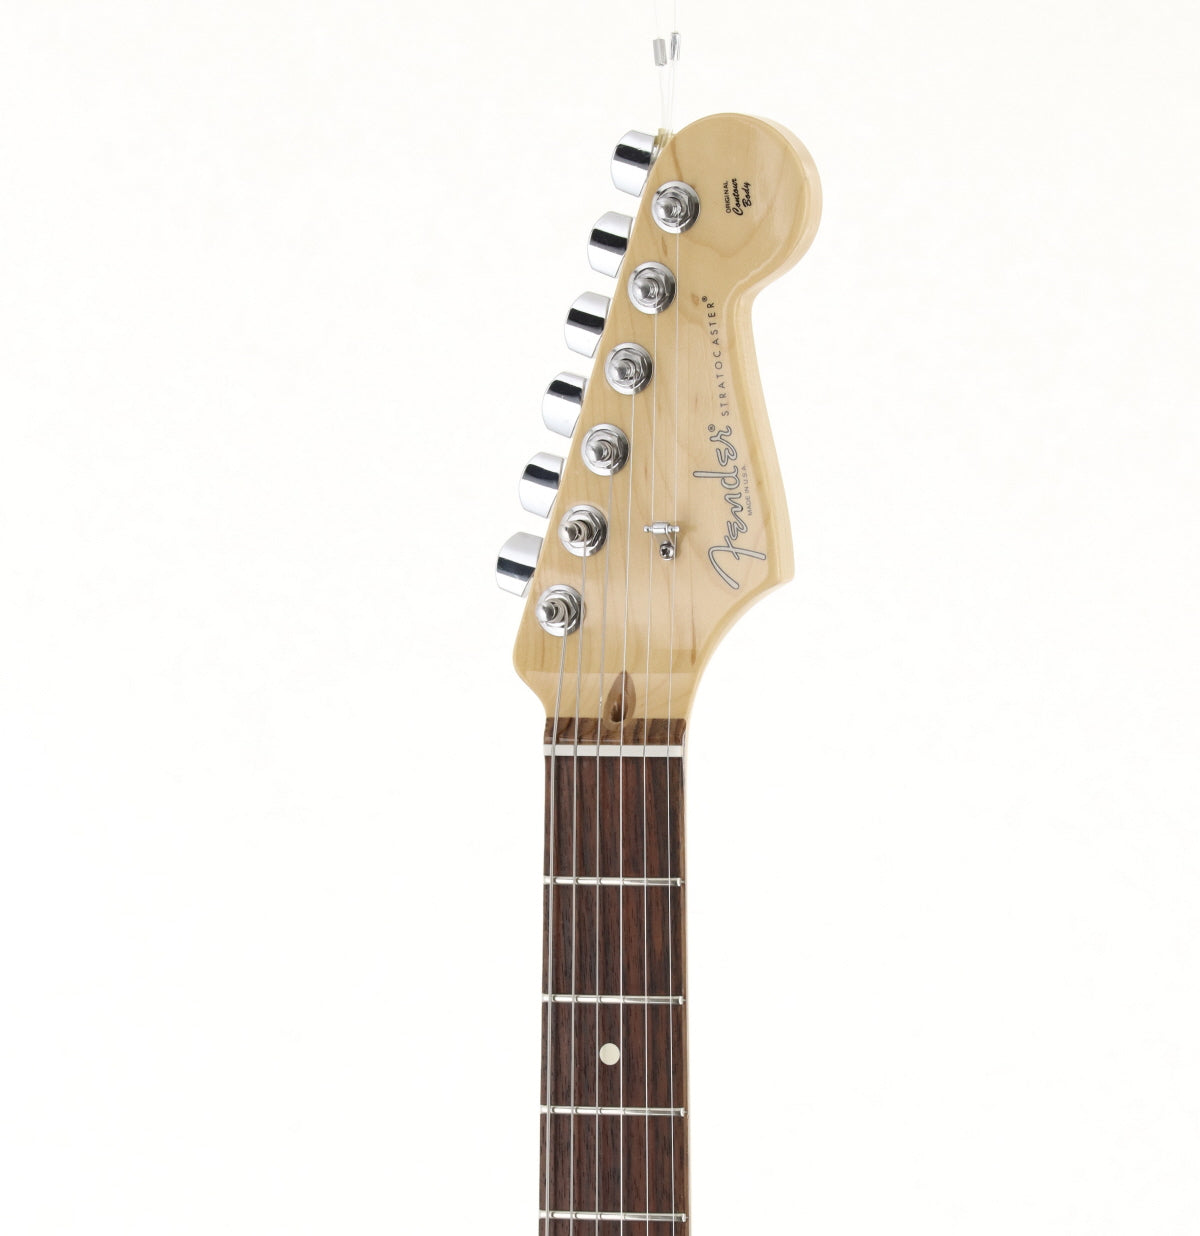 [SN US12263437] USED Fender USA / FSR 2012 American Standard Lipstick Stratocaster Lake Placid Blue [06]